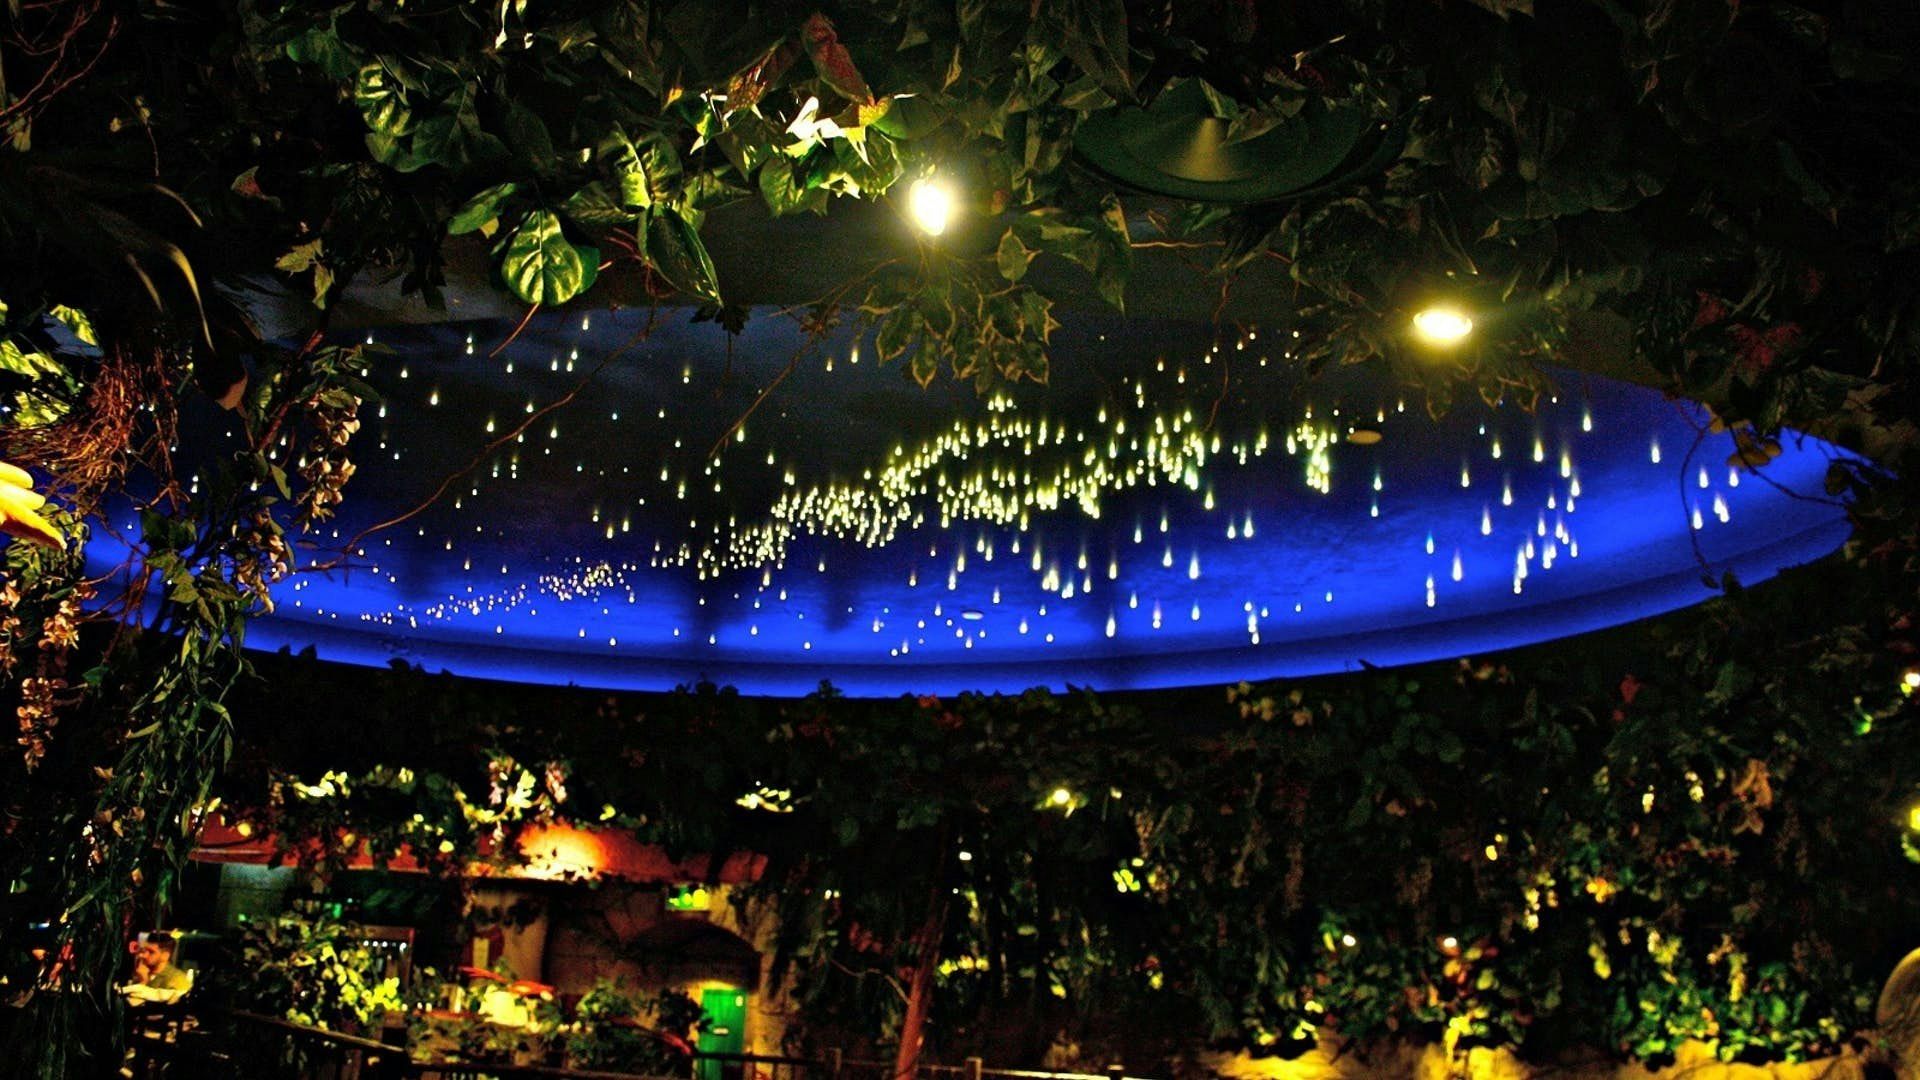 rainforest cafe